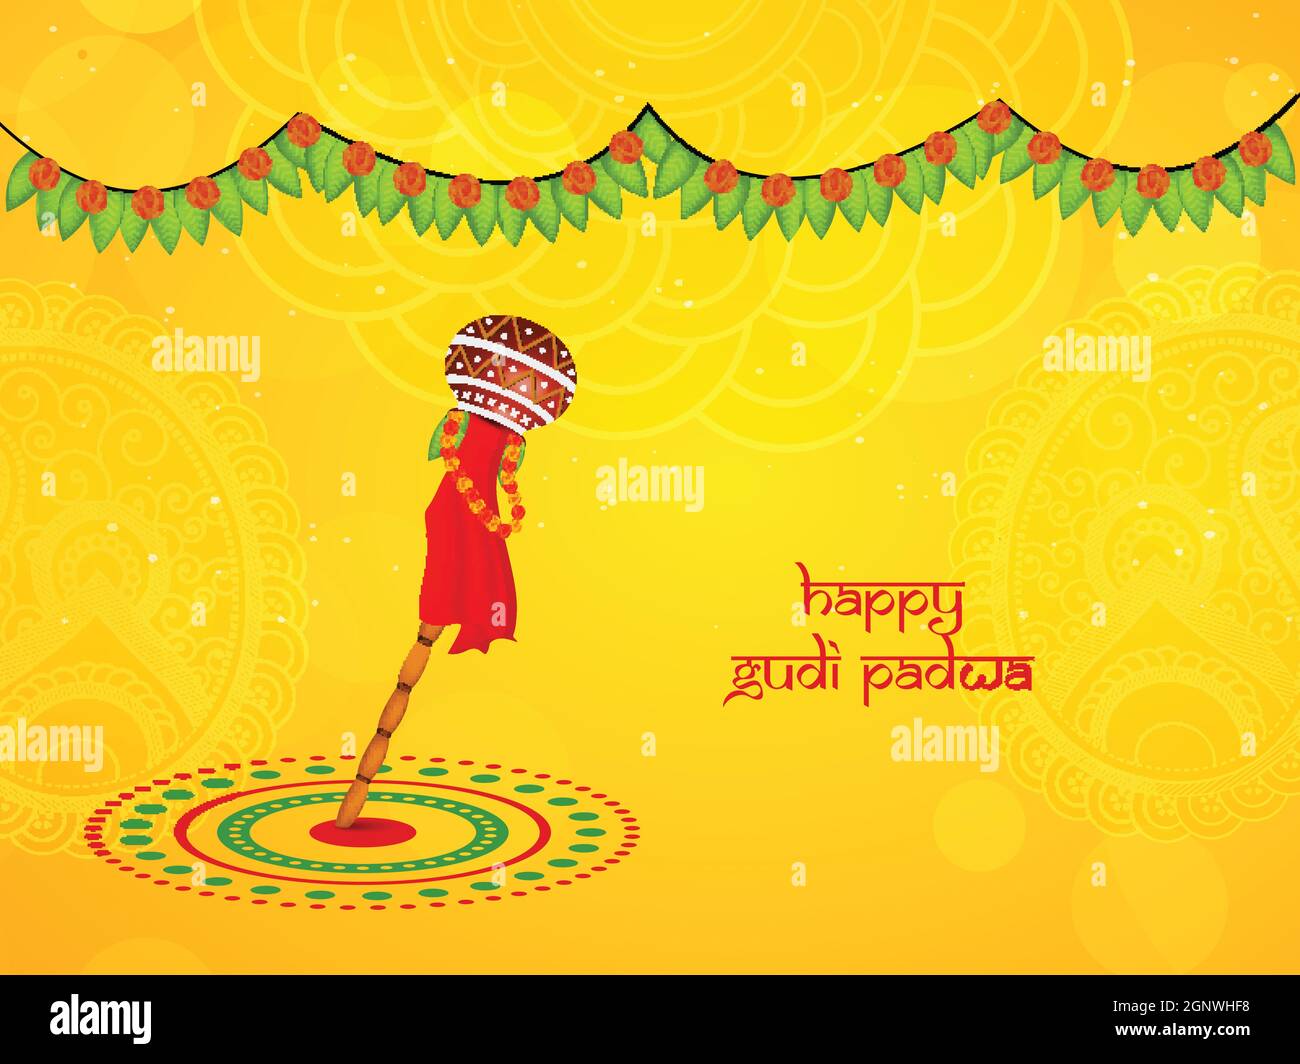 Gudi Padwa Marathi Festival Background Stock Vector Image & Art - Alamy